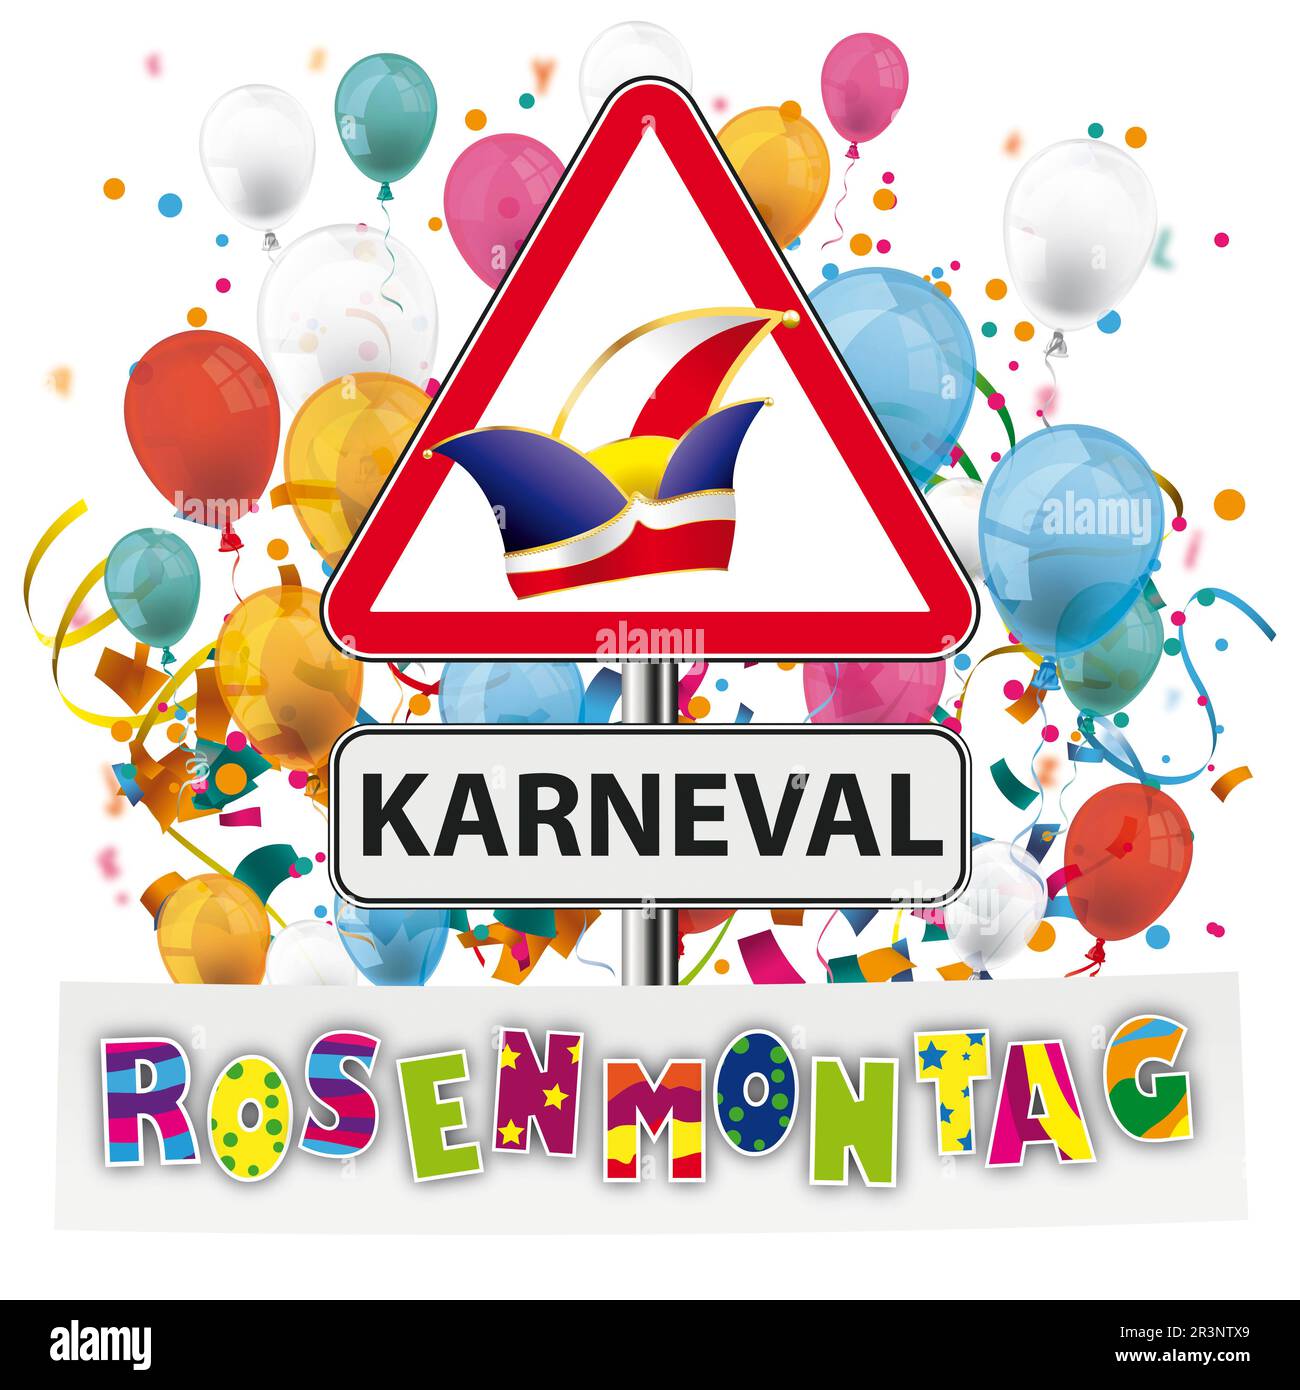 Warning Sign Karneval Rosenmontag Confetti Balloons Stock Photo